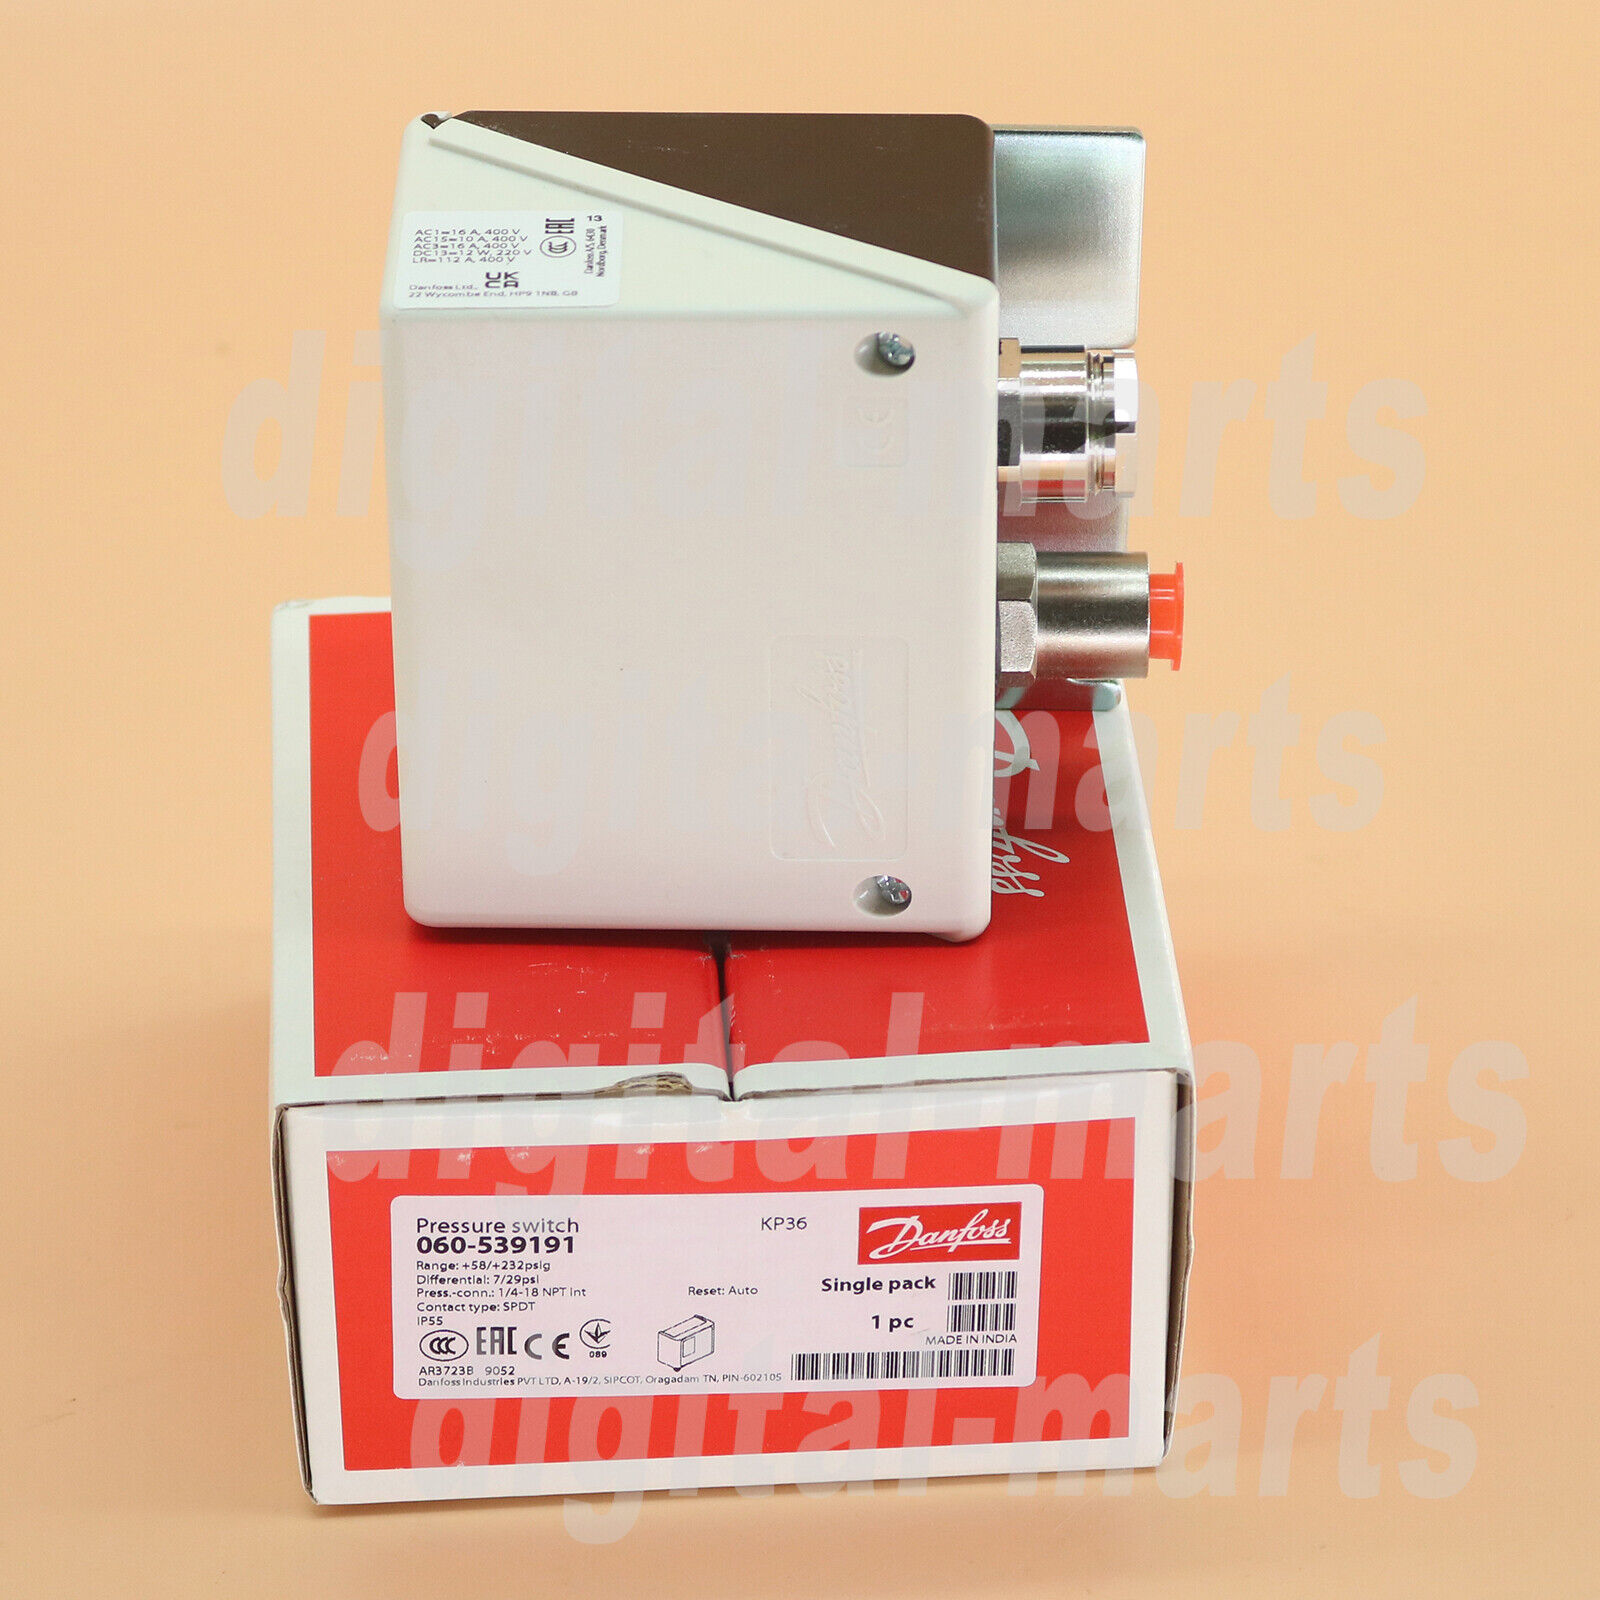 1PC New  Danfoss KP36 060-539191 Pressure switch #LJ